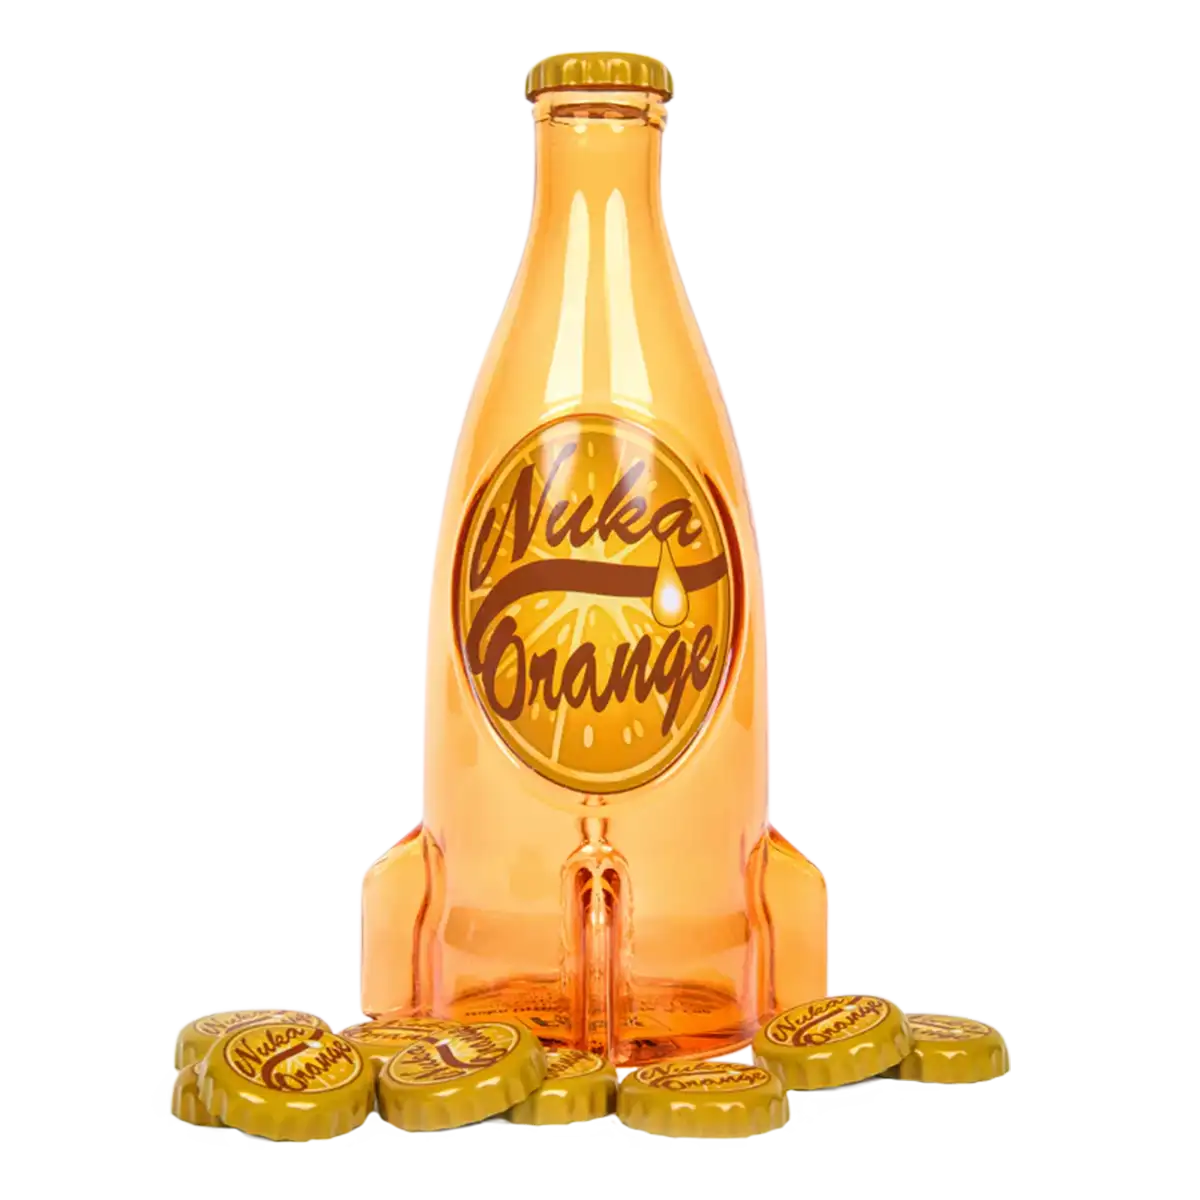 Fallout "Nuka Cola Orange" Glasflasche und Kronkorken Cover